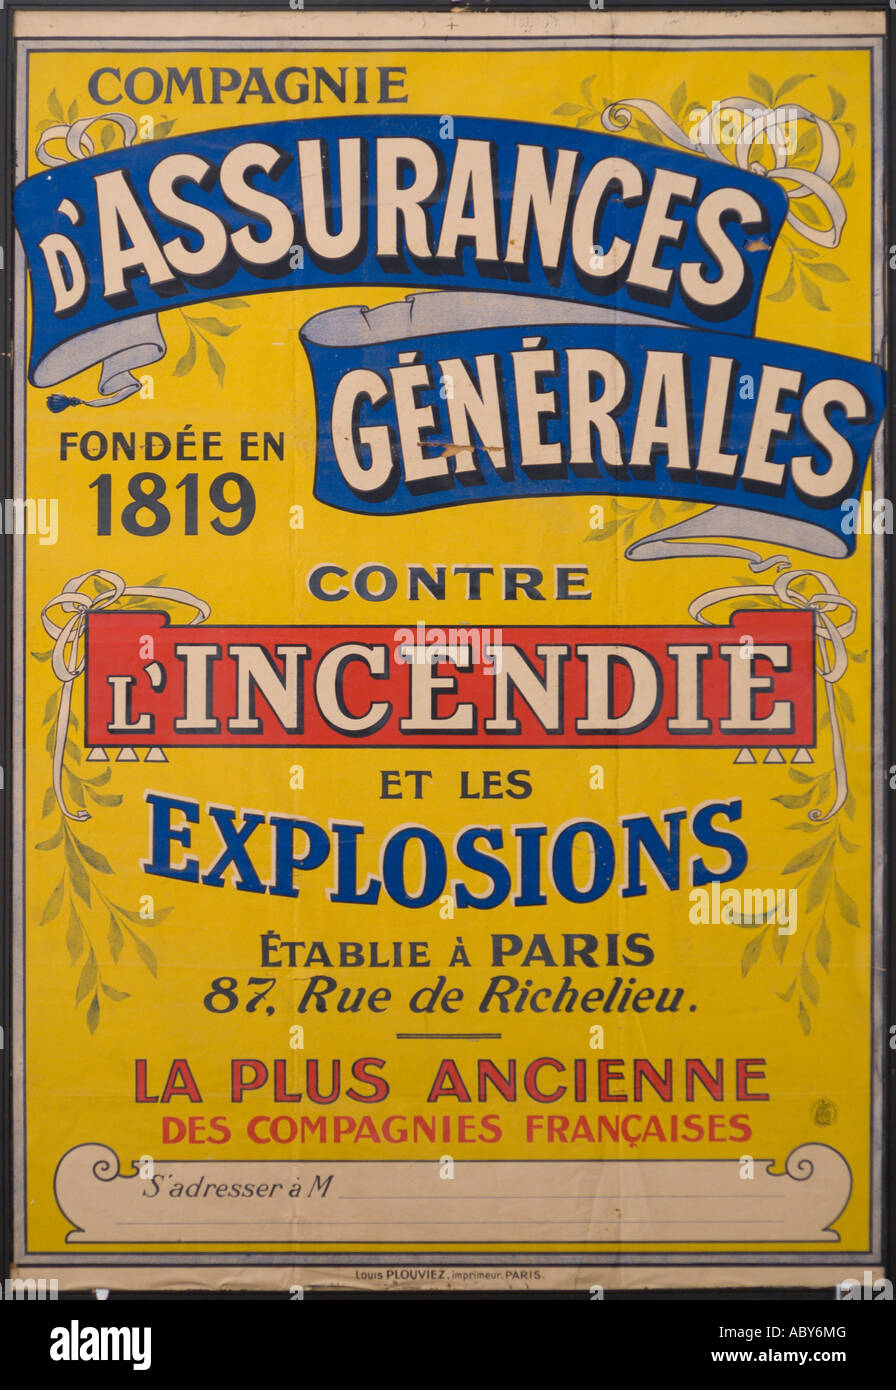 Bandol Cote D' Azur Varoise France Vintage French Travel Advertisement Poster 